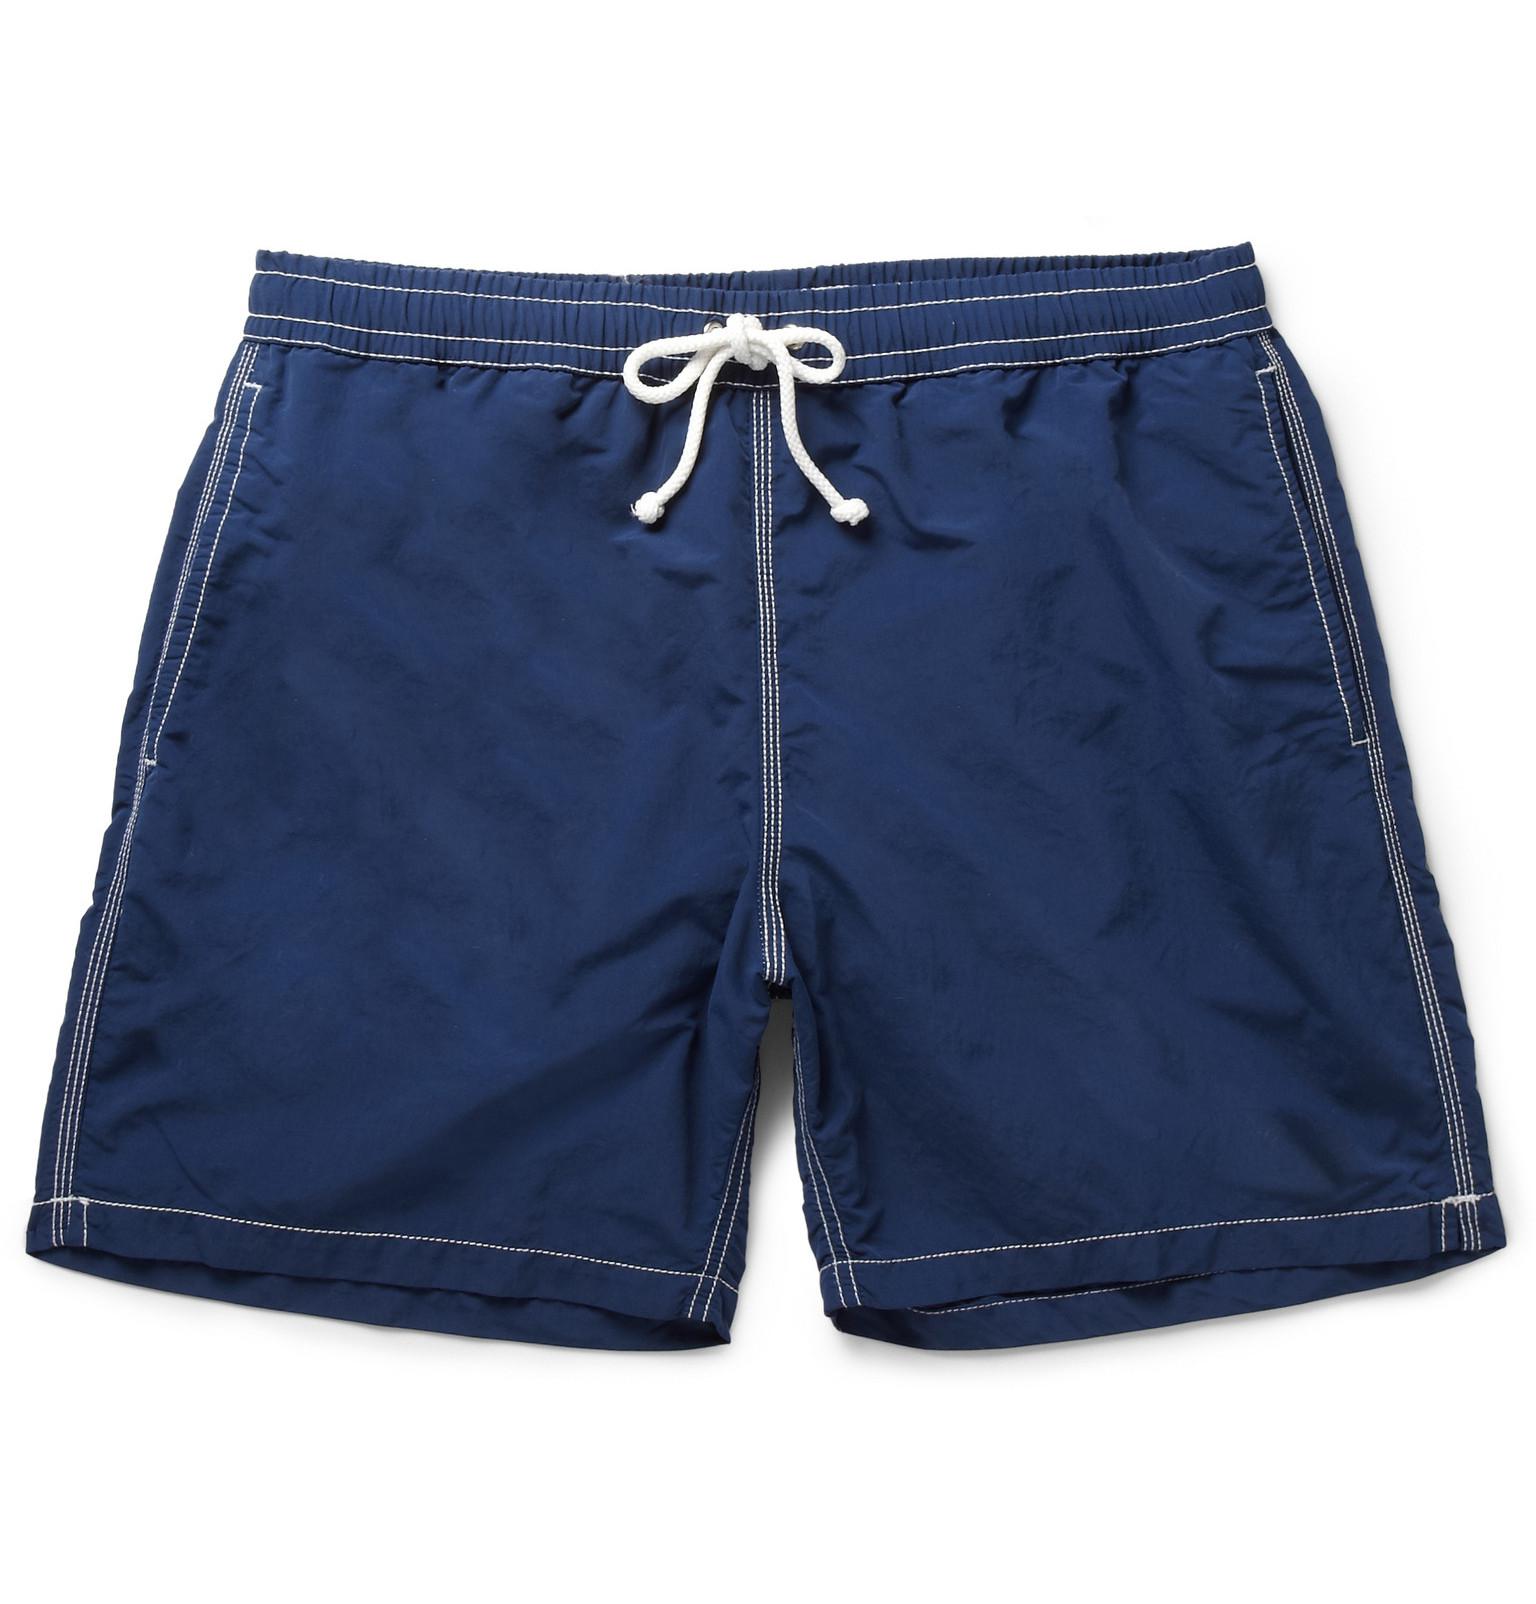 Lyst - Hartford Mid-length Swim Shorts in Blue for Men